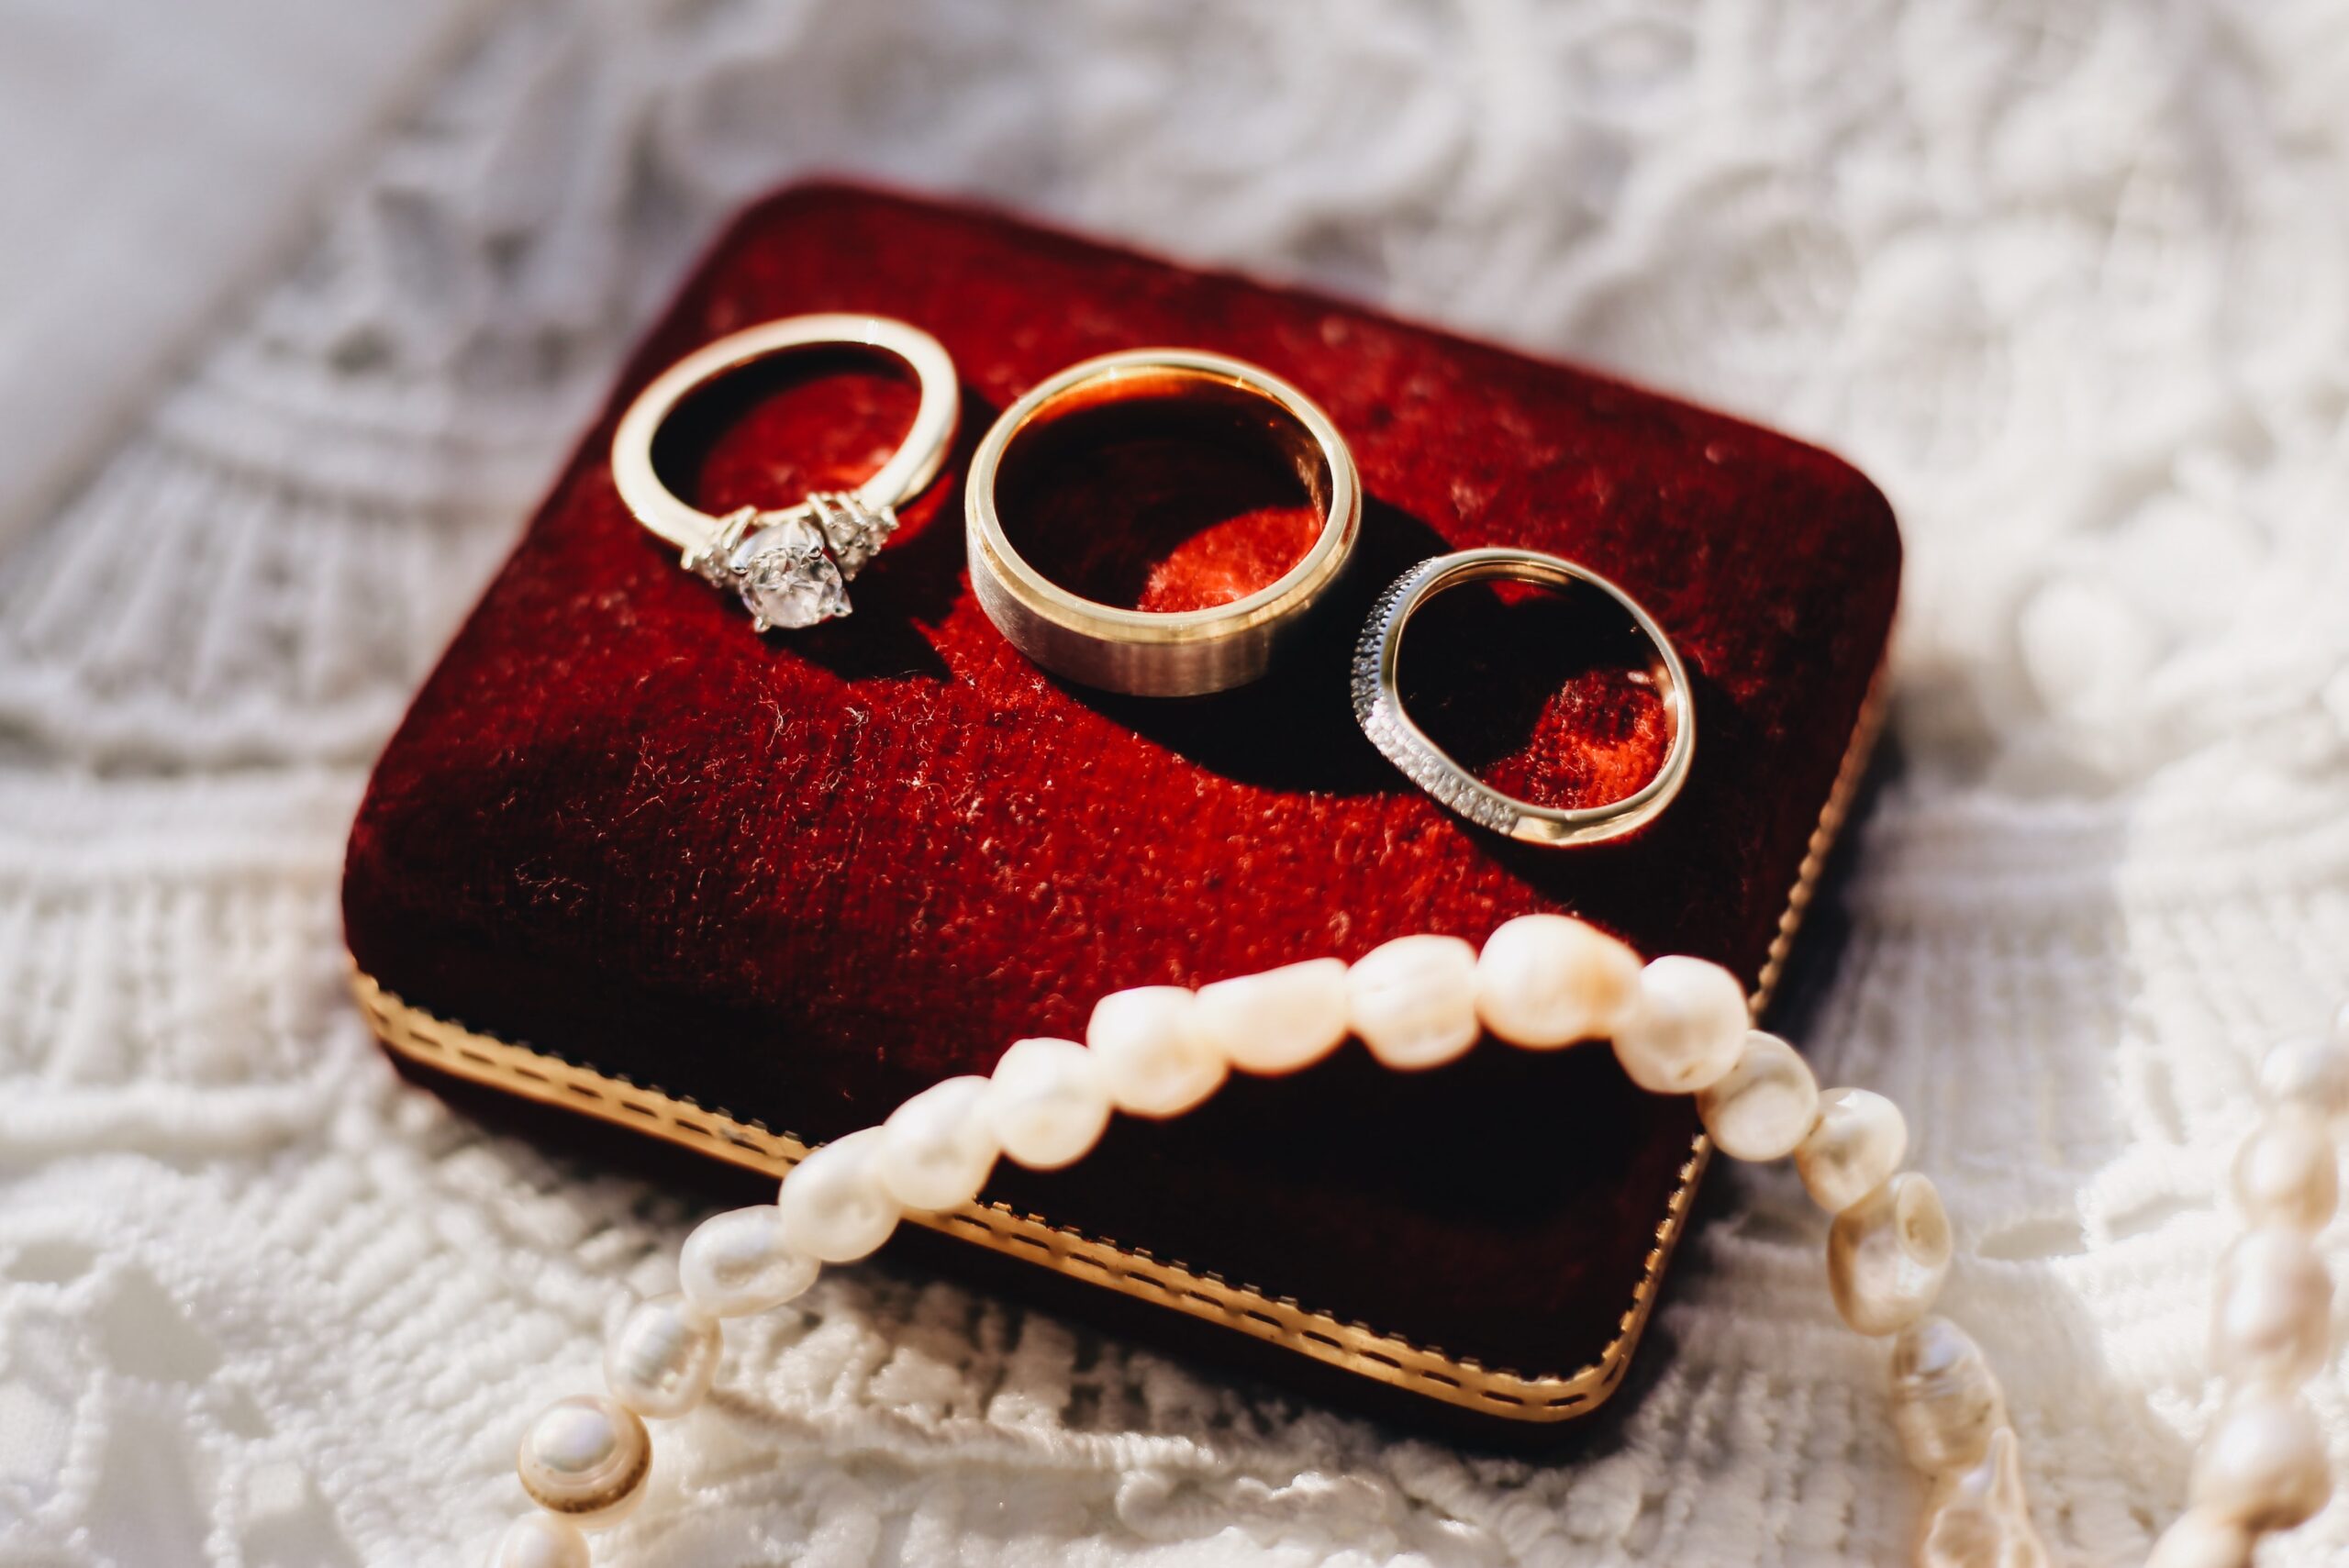 What Wedding Jewellery Should I Wear?